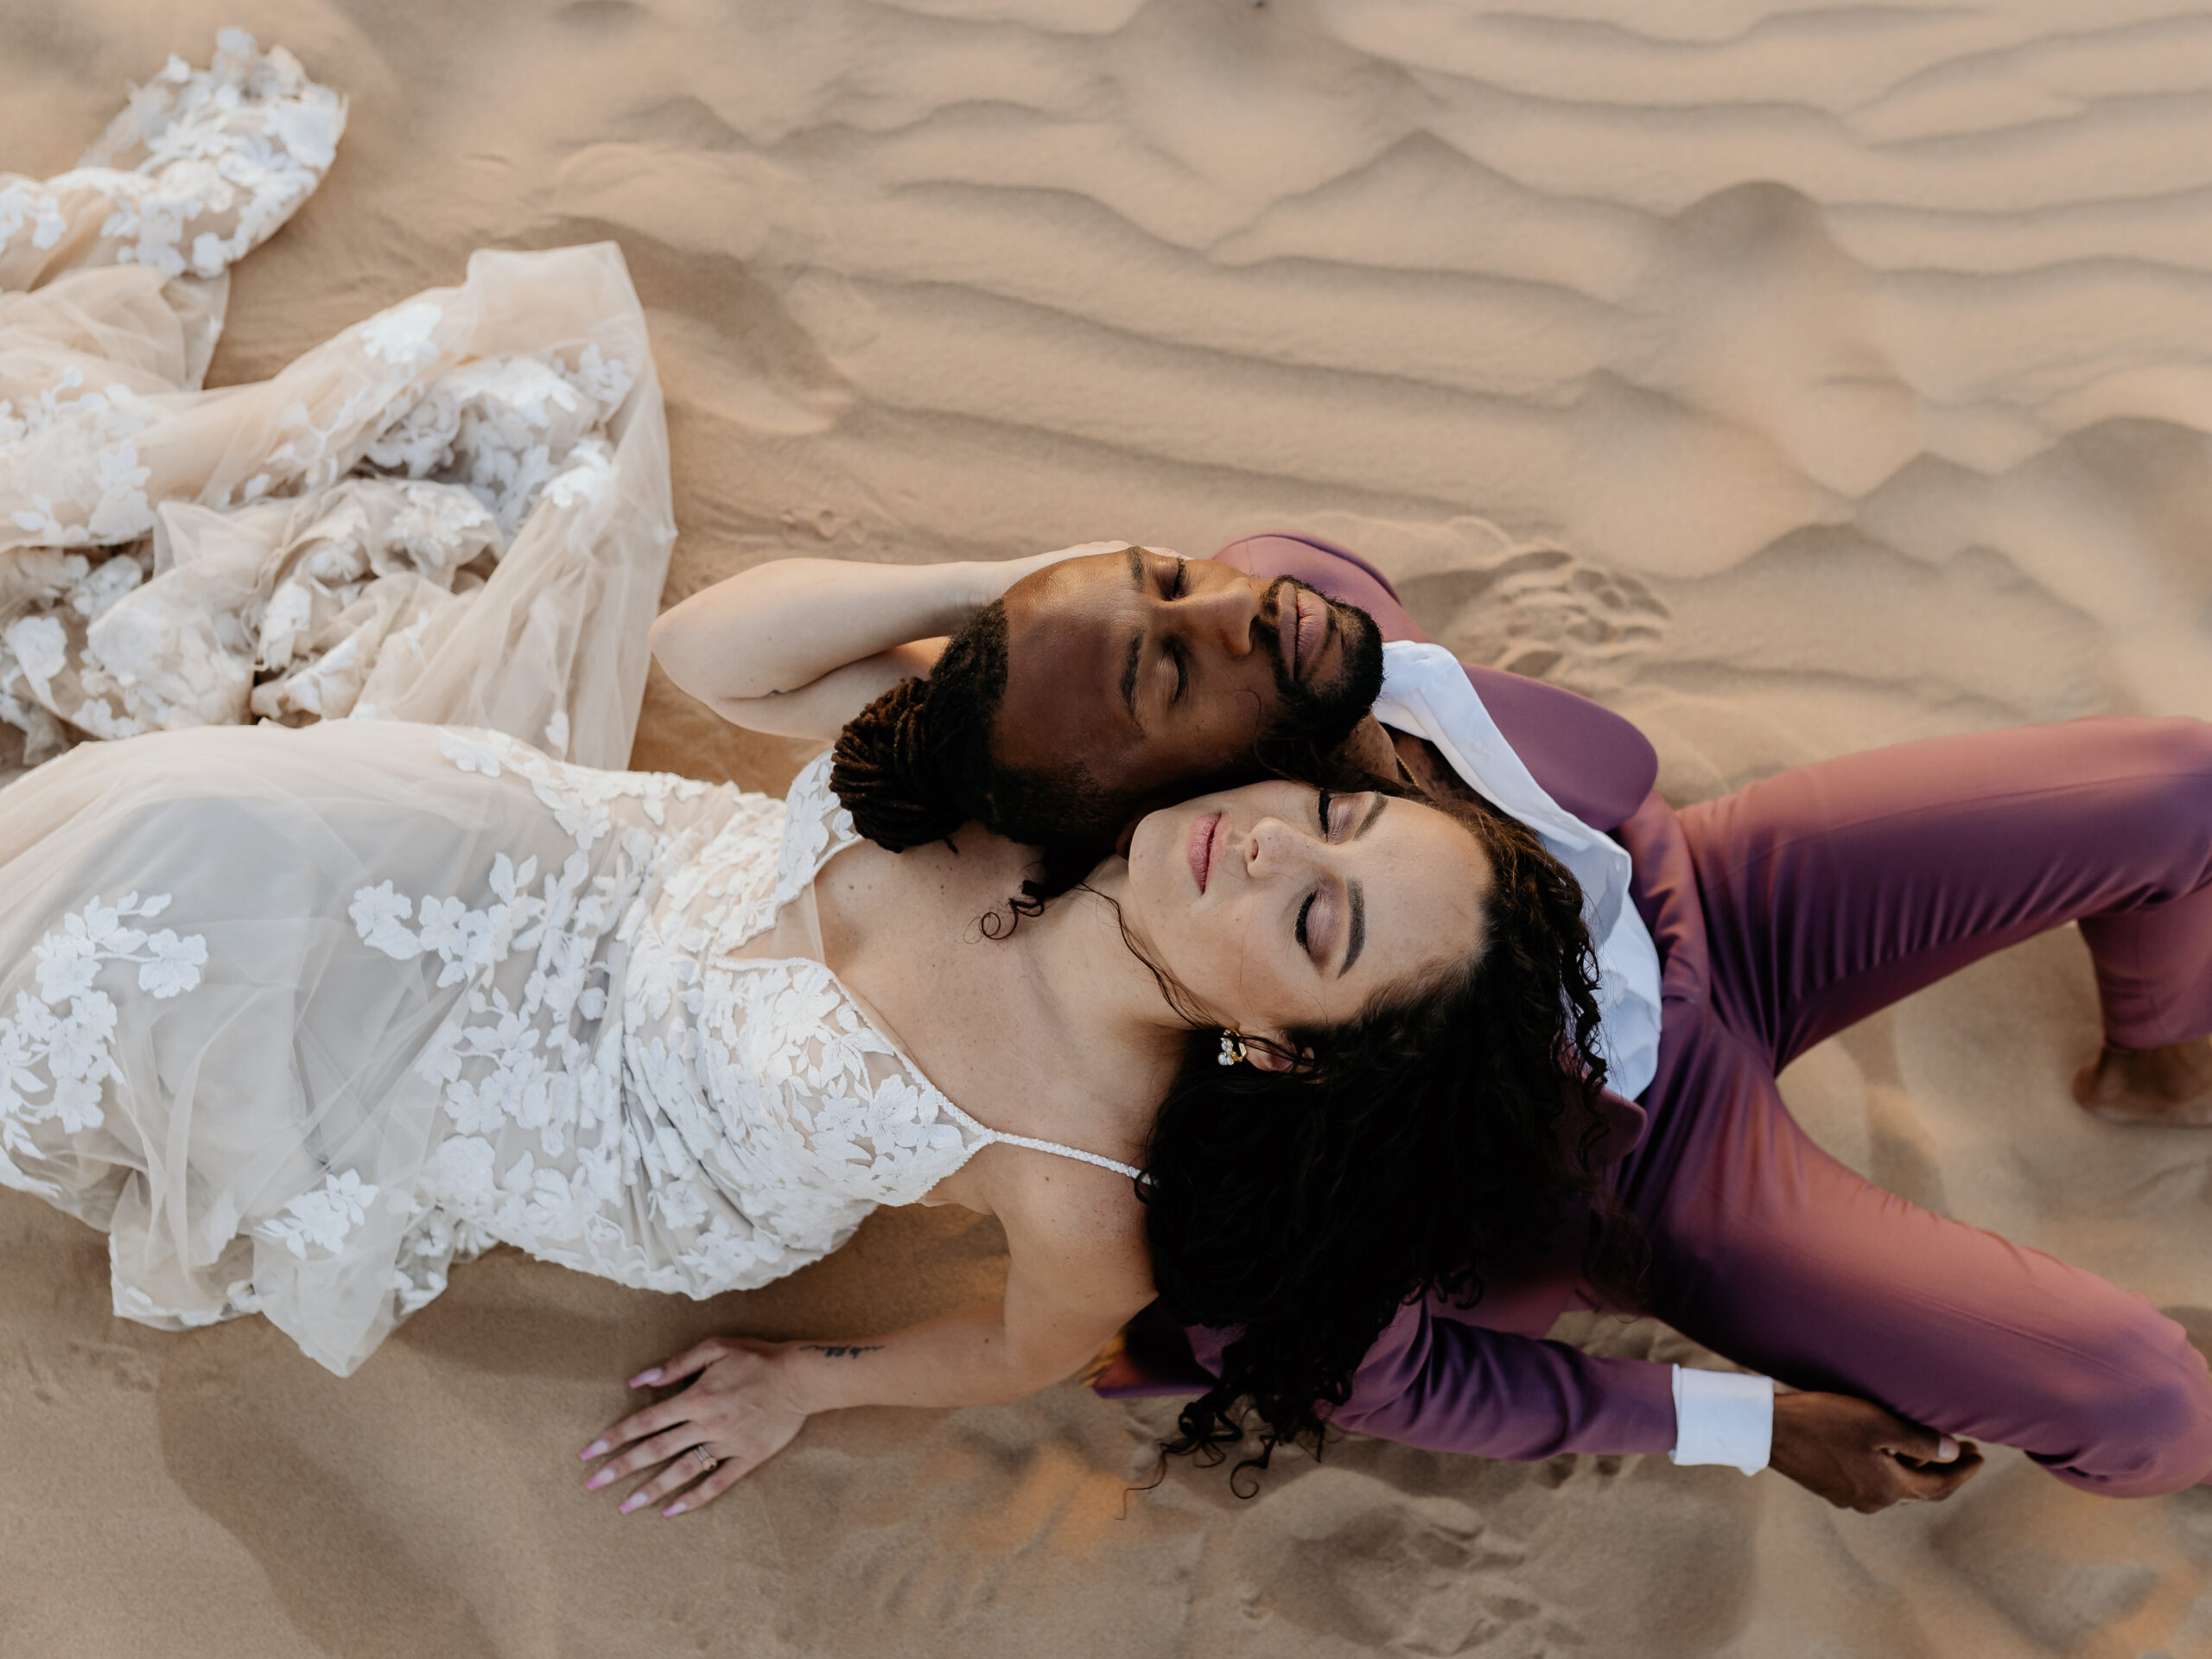 Interracial couple's stunning wedding photos at Glamis Sand Dunes